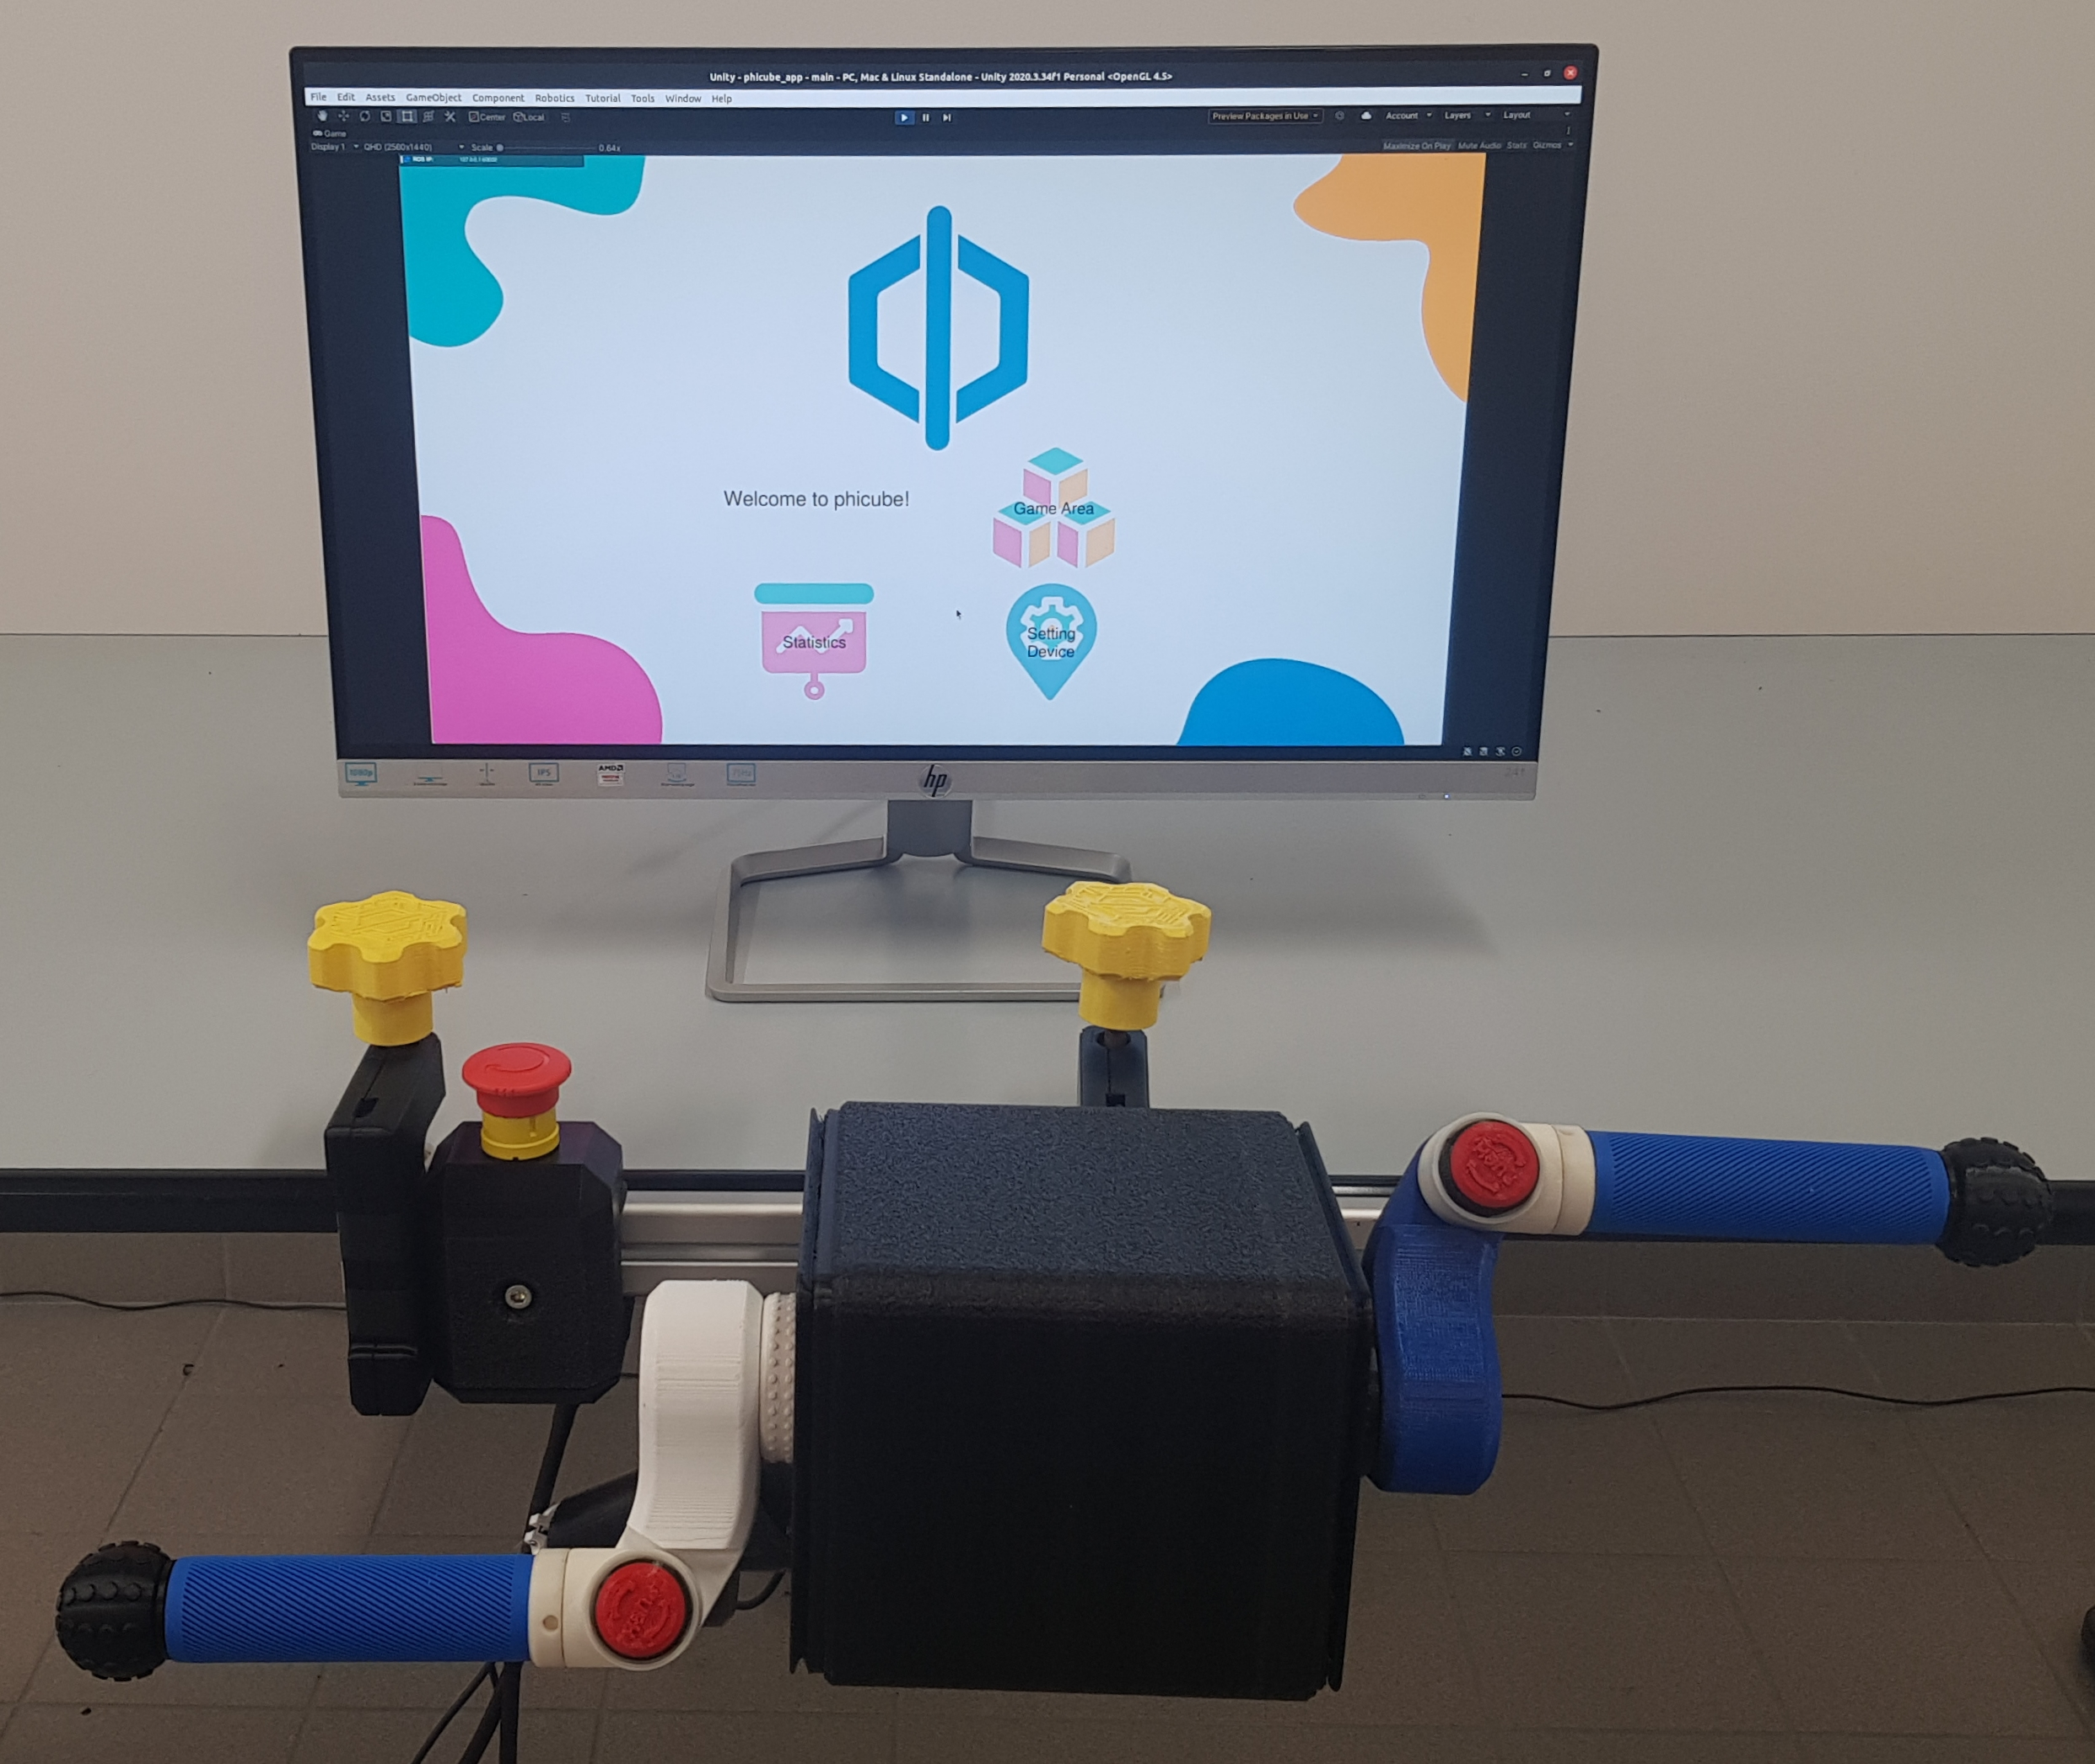 PhiCube – A friendly robotic device for upper-limb telerehabilitation